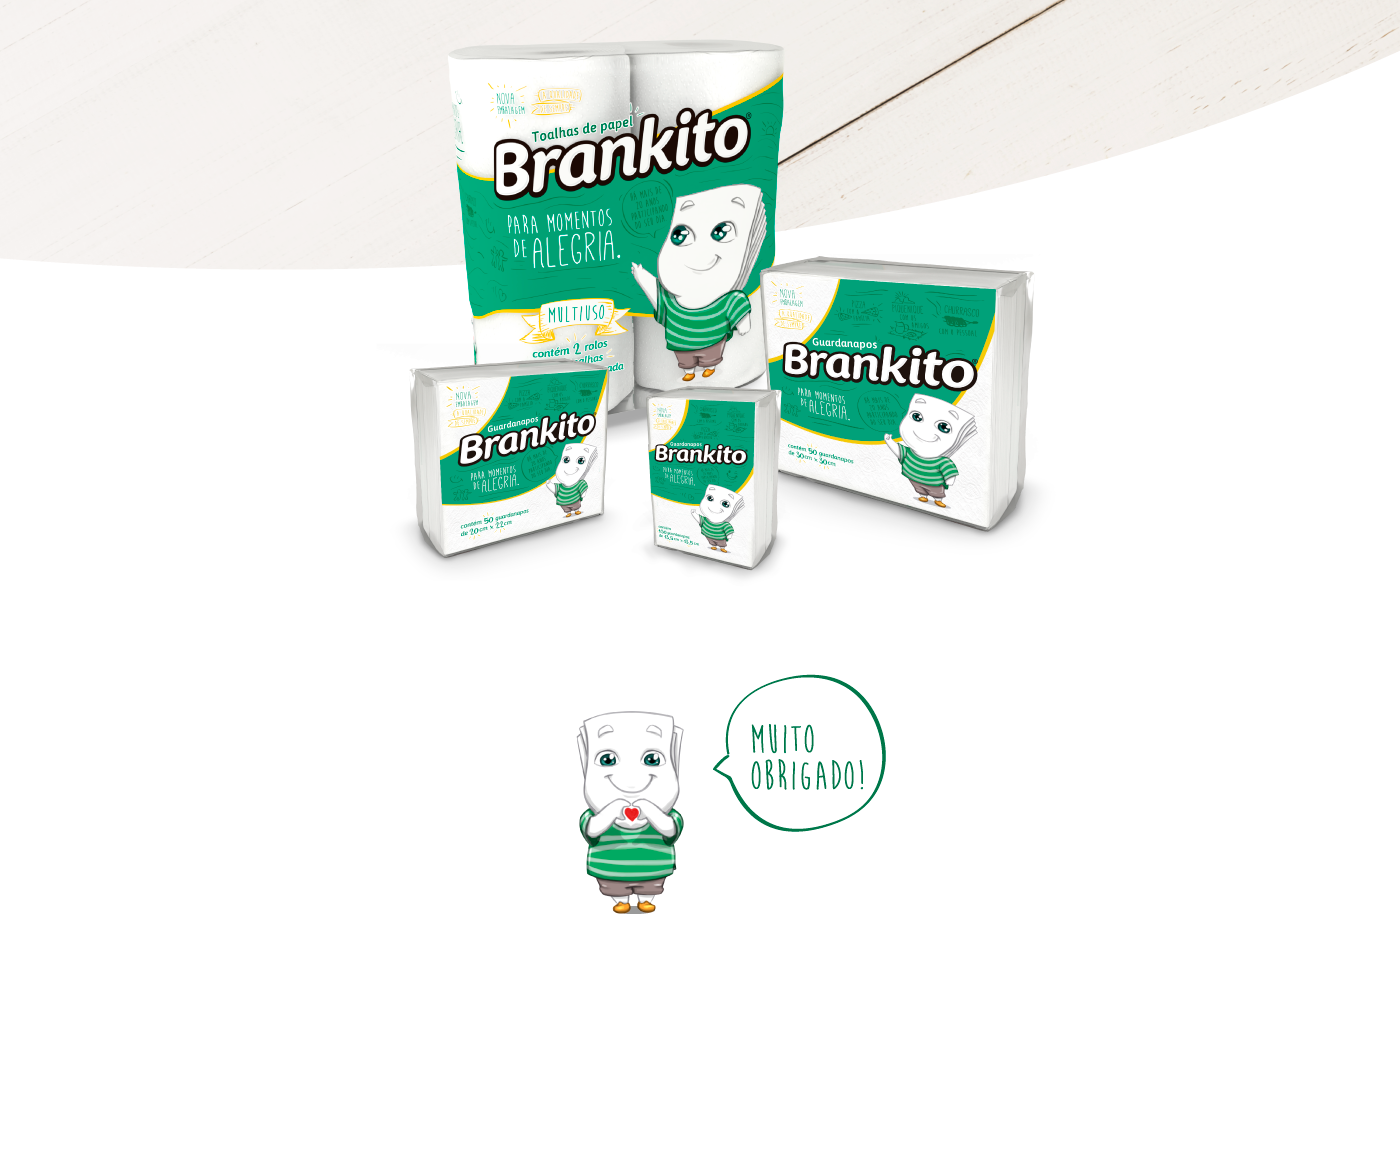 guardanapo napkin embalagem package mascote Mascot brankito identidade visual brand identity